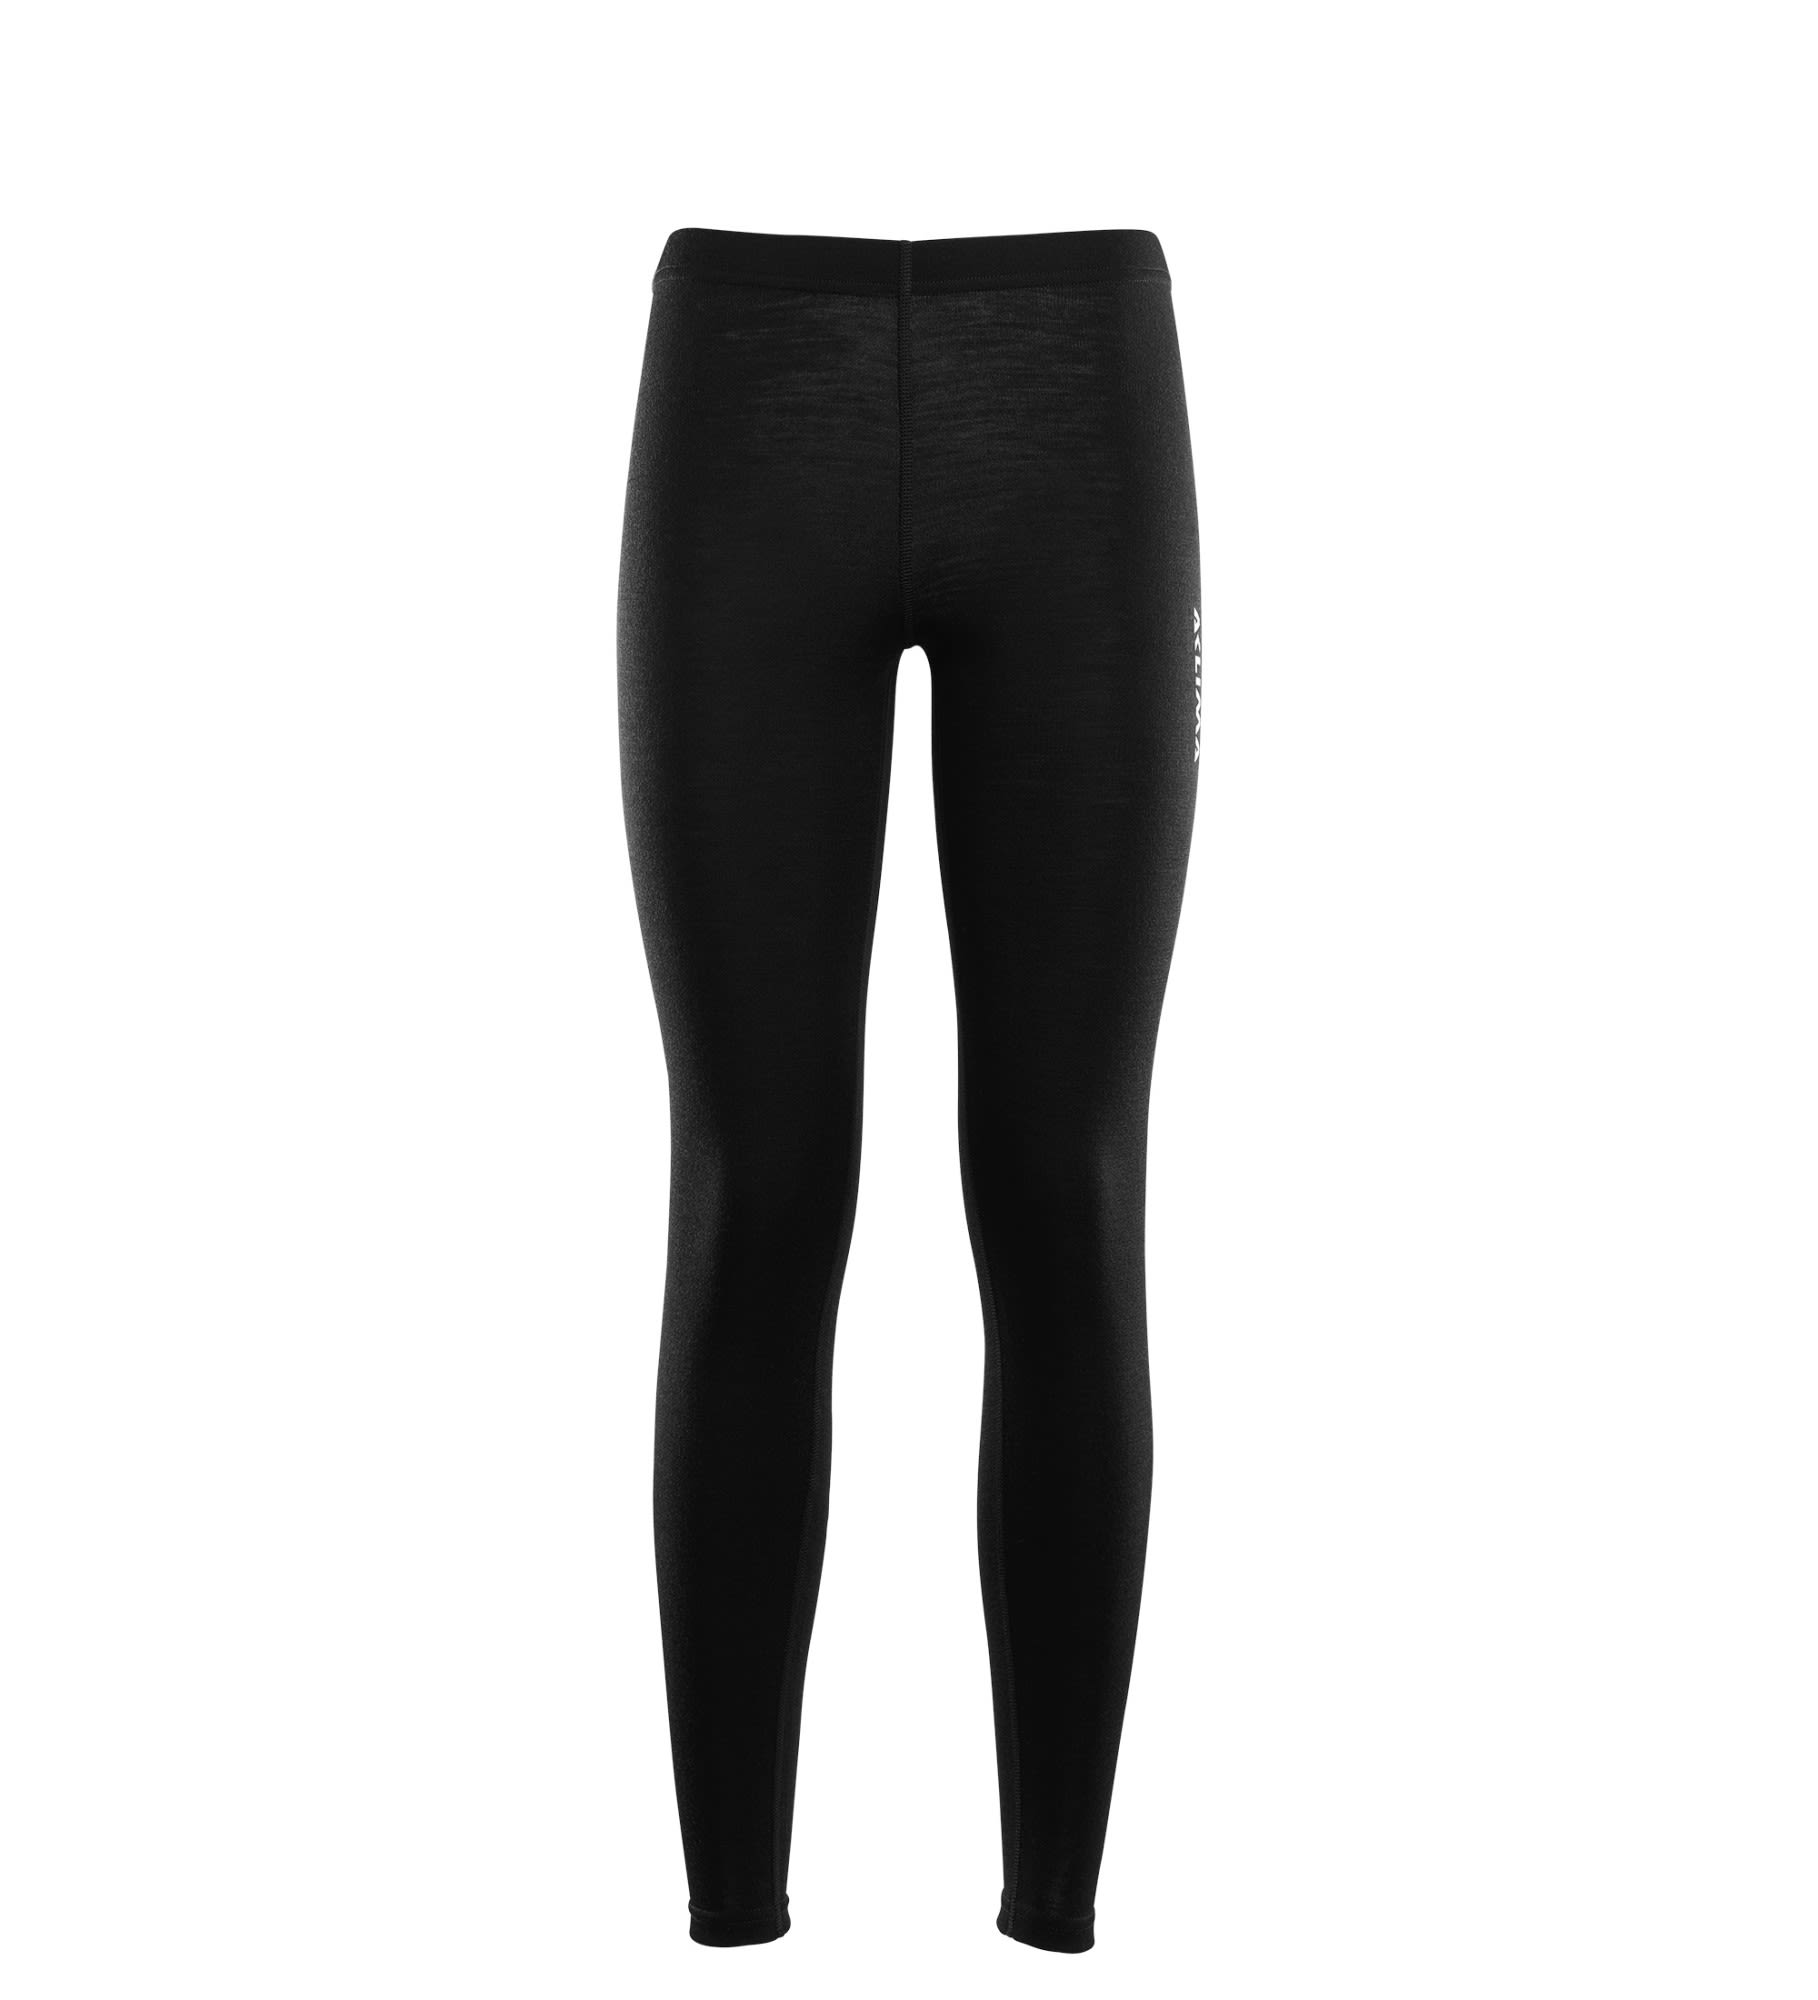 Aclima Warmwool Long Pant Schwarz- Female Merino Leggings und Tights- Grsse XS - Farbe Jet Black unter Aclima